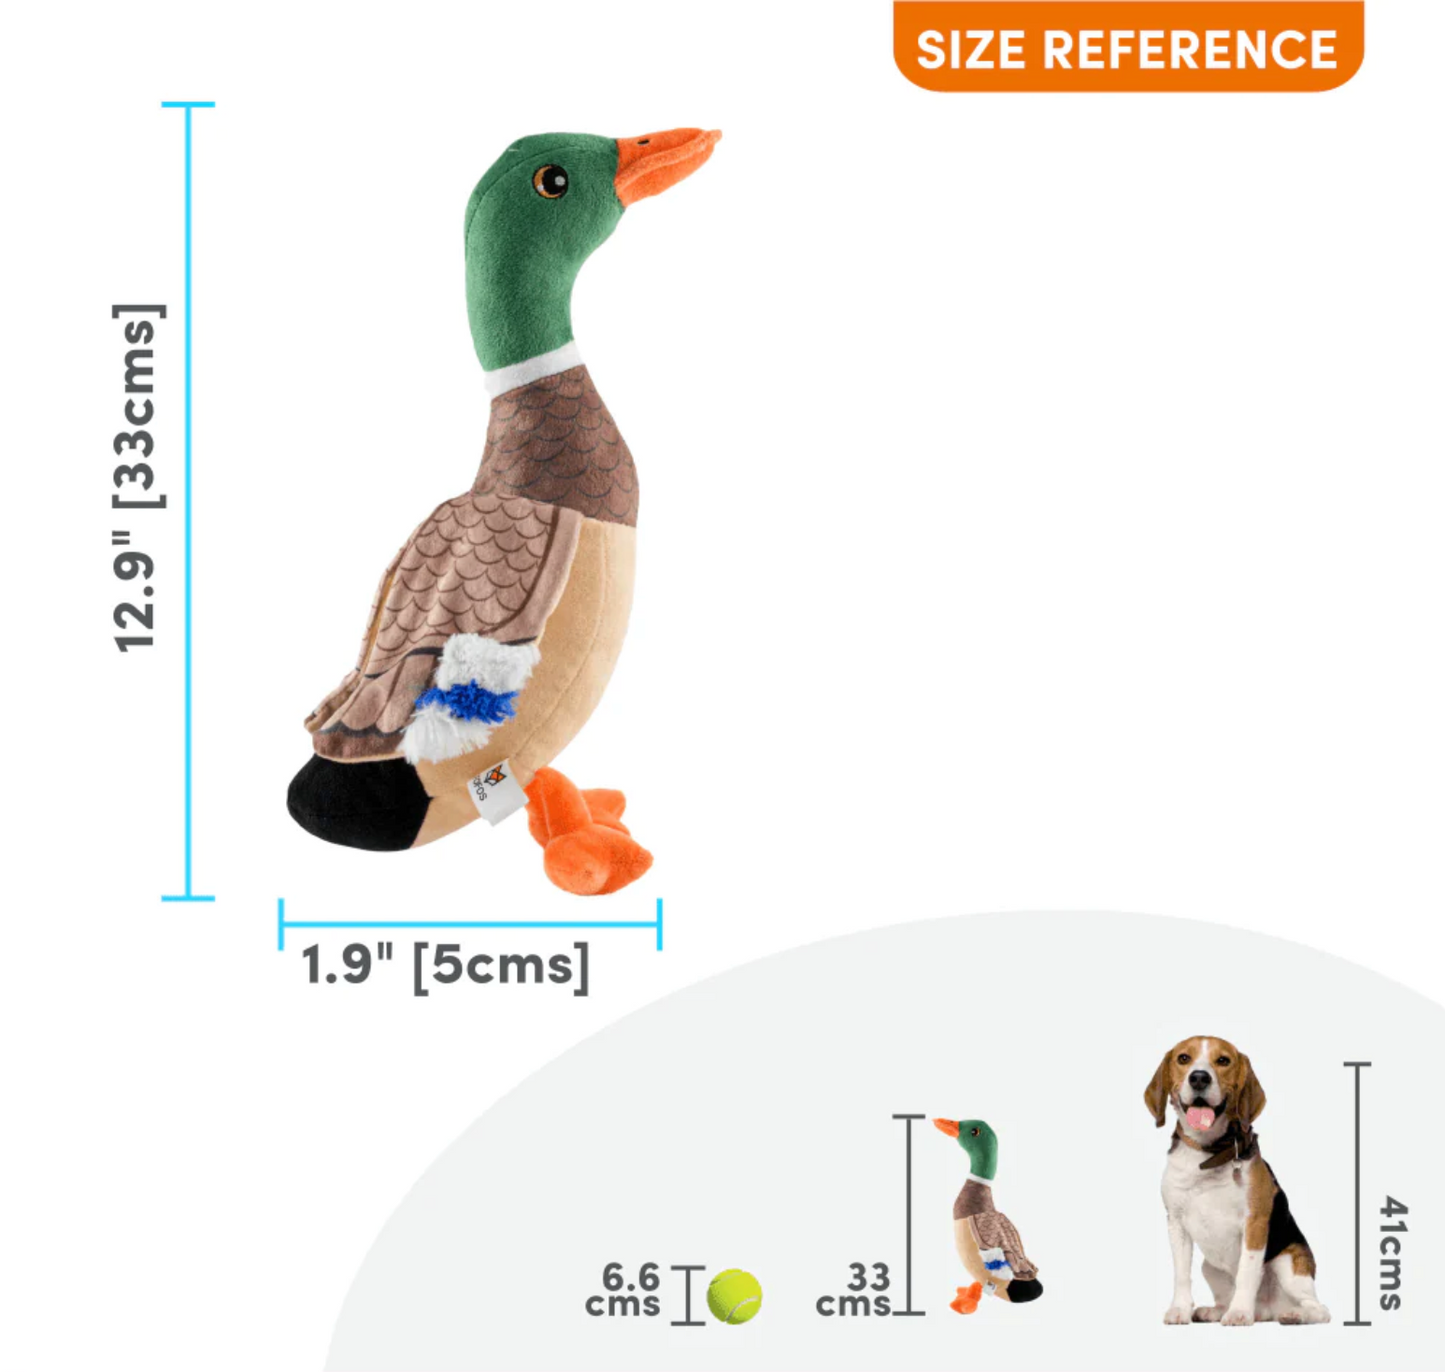 Wildlife Toy | Wild Duck | Plush Squeaky Dog Toy